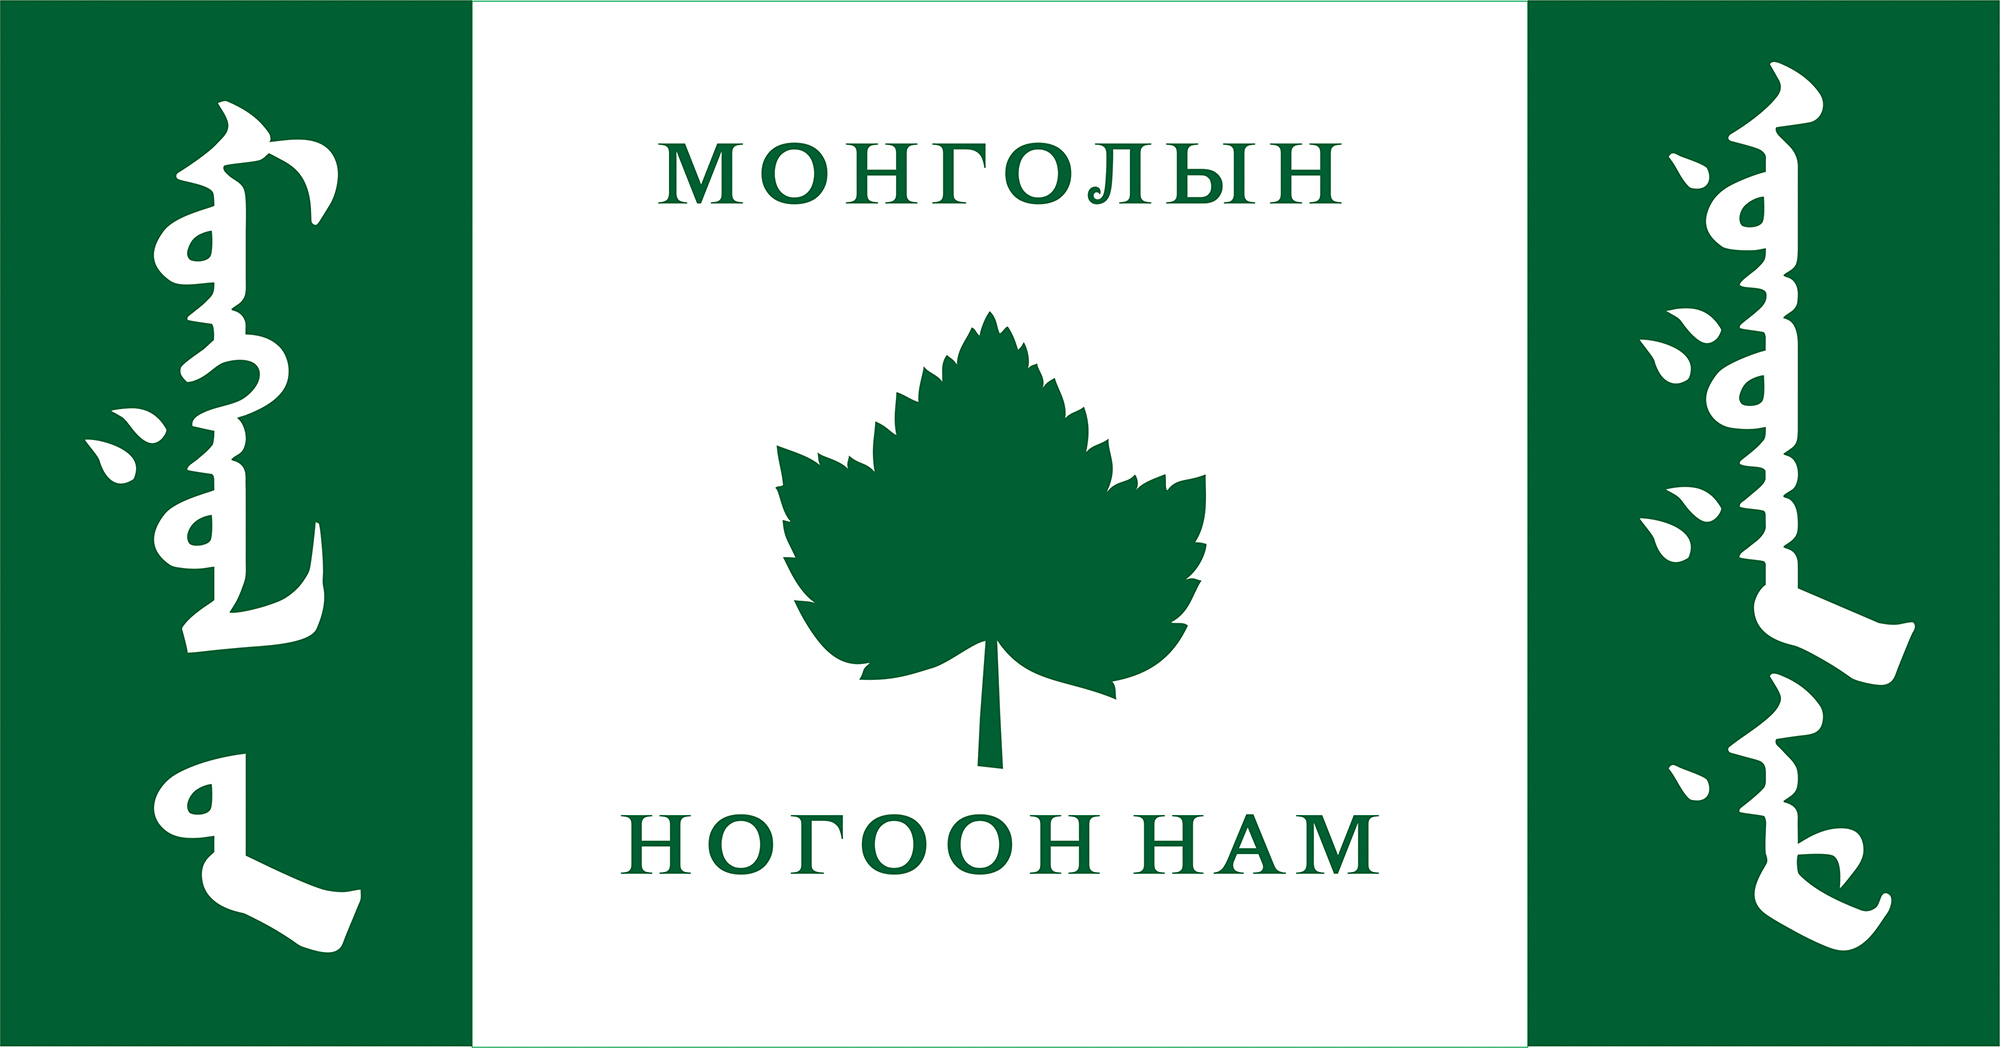 Mongolian Green party